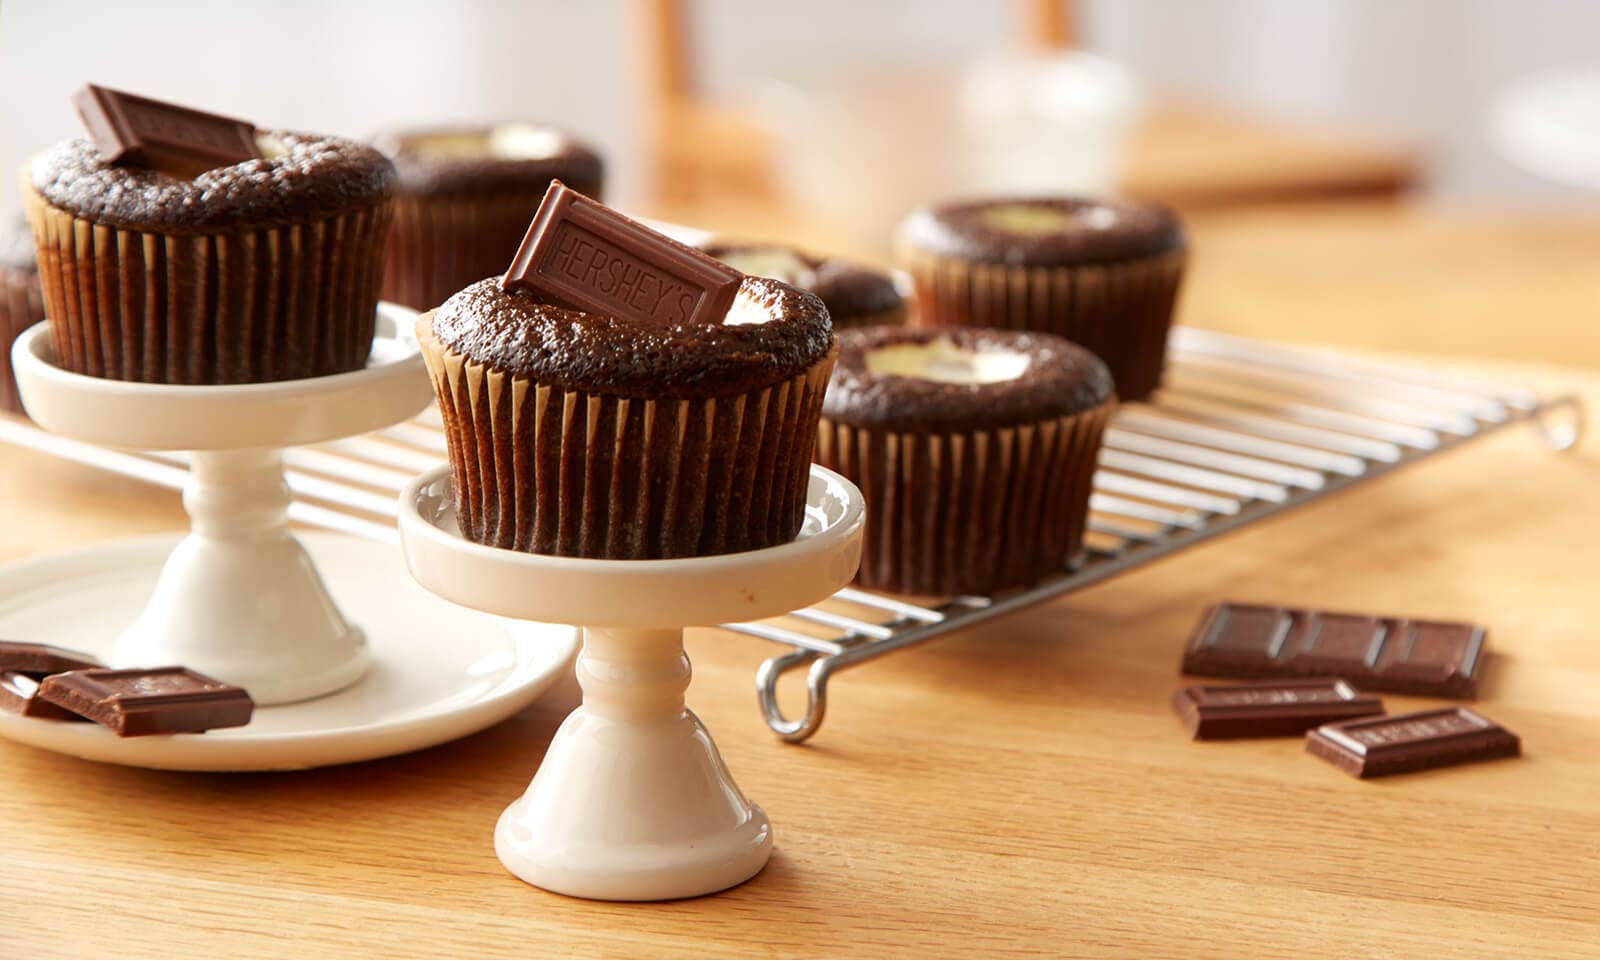 Chocolate Bar-Filled Chocolate Cupcakes